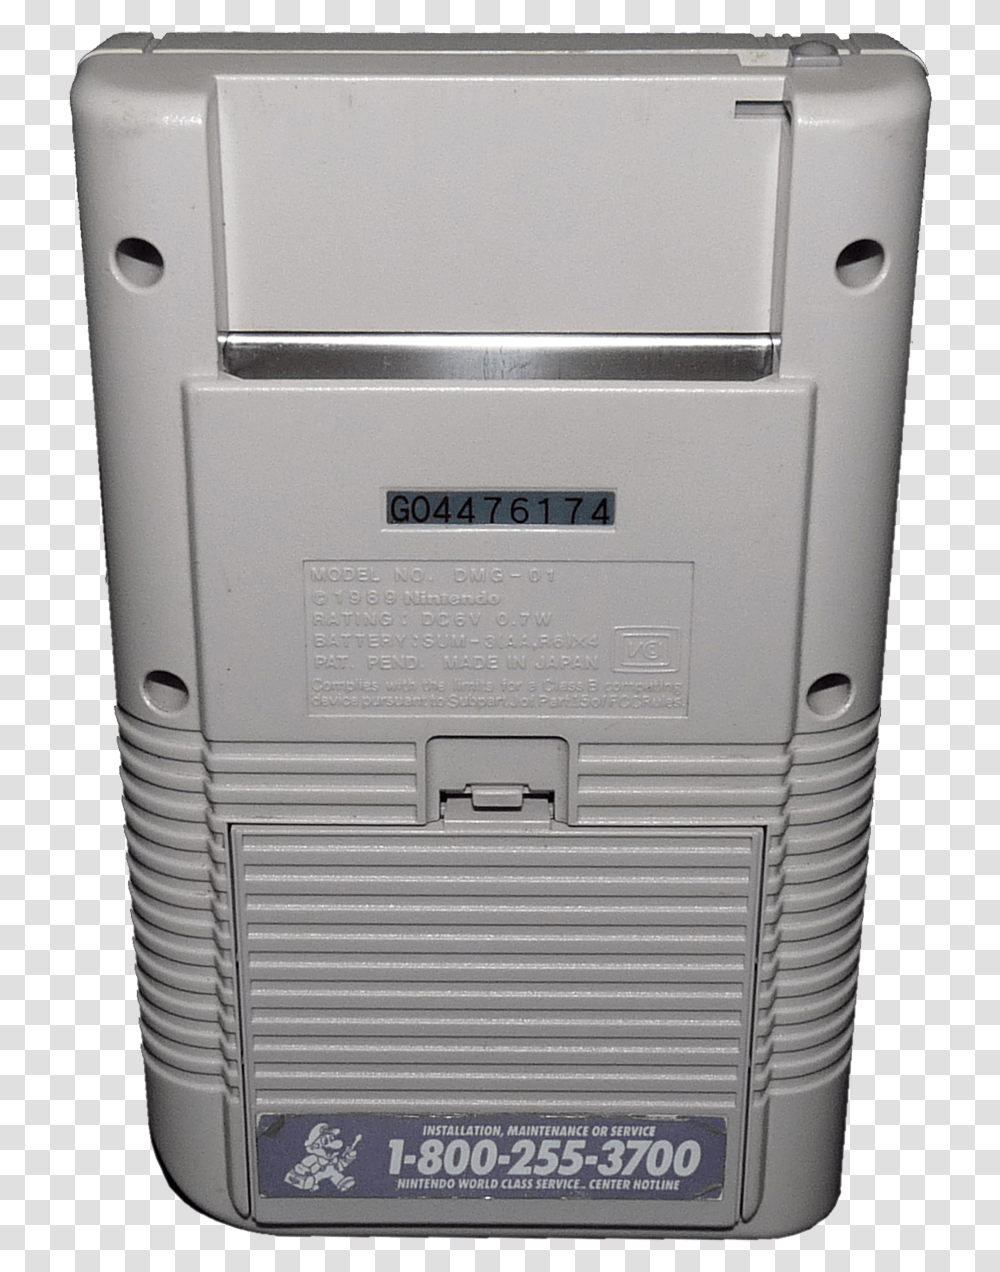 Nintendo Game Boy Back, Mailbox, Letterbox, Appliance, Cooler Transparent Png